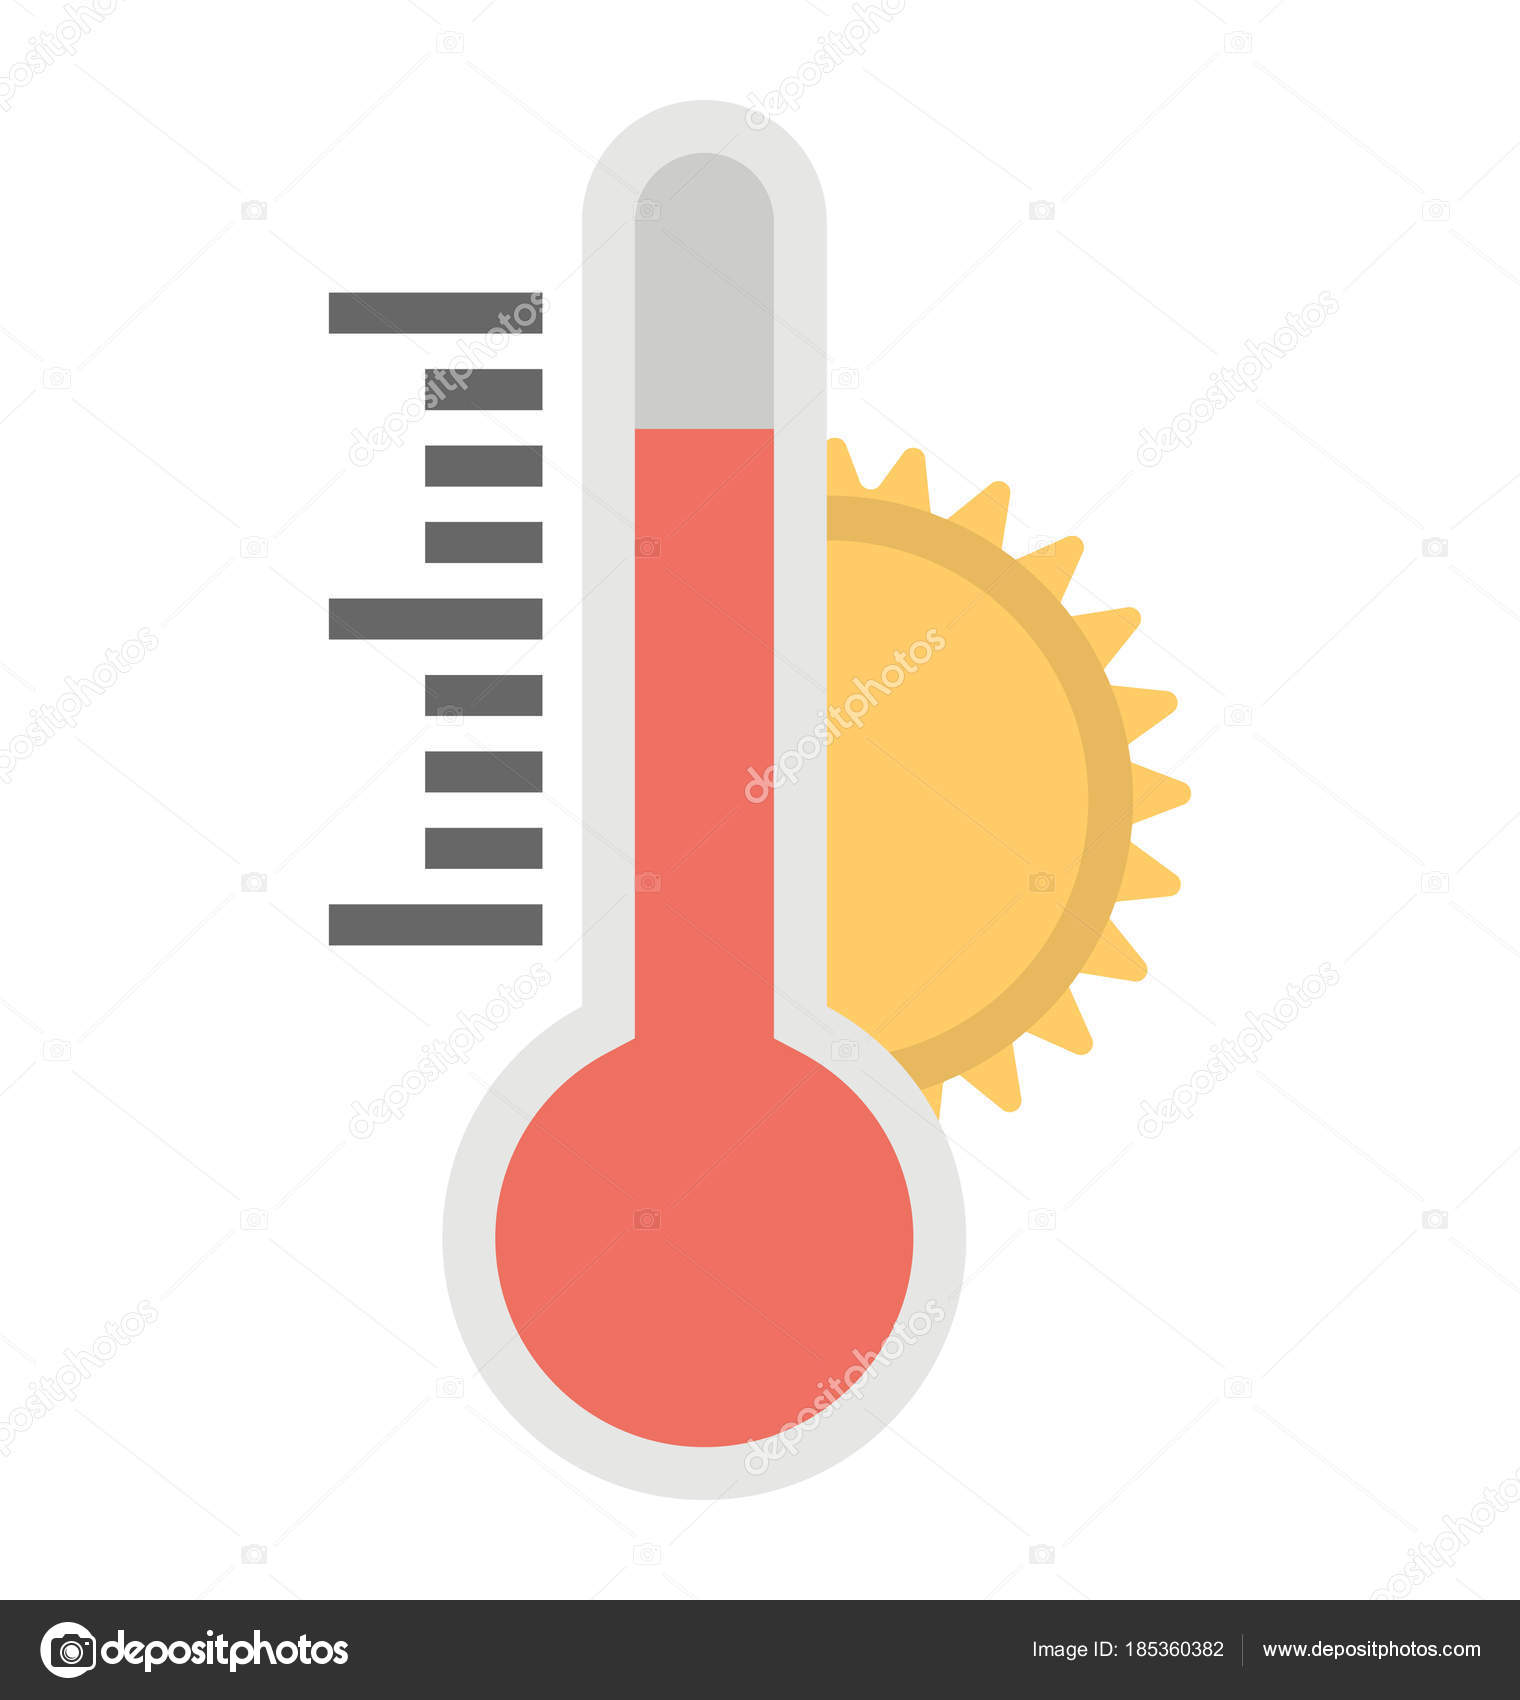 https://st3.depositphotos.com/4060975/18536/v/1600/depositphotos_185360382-stock-illustration-weather-thermometer-showing-high-temperature.jpg